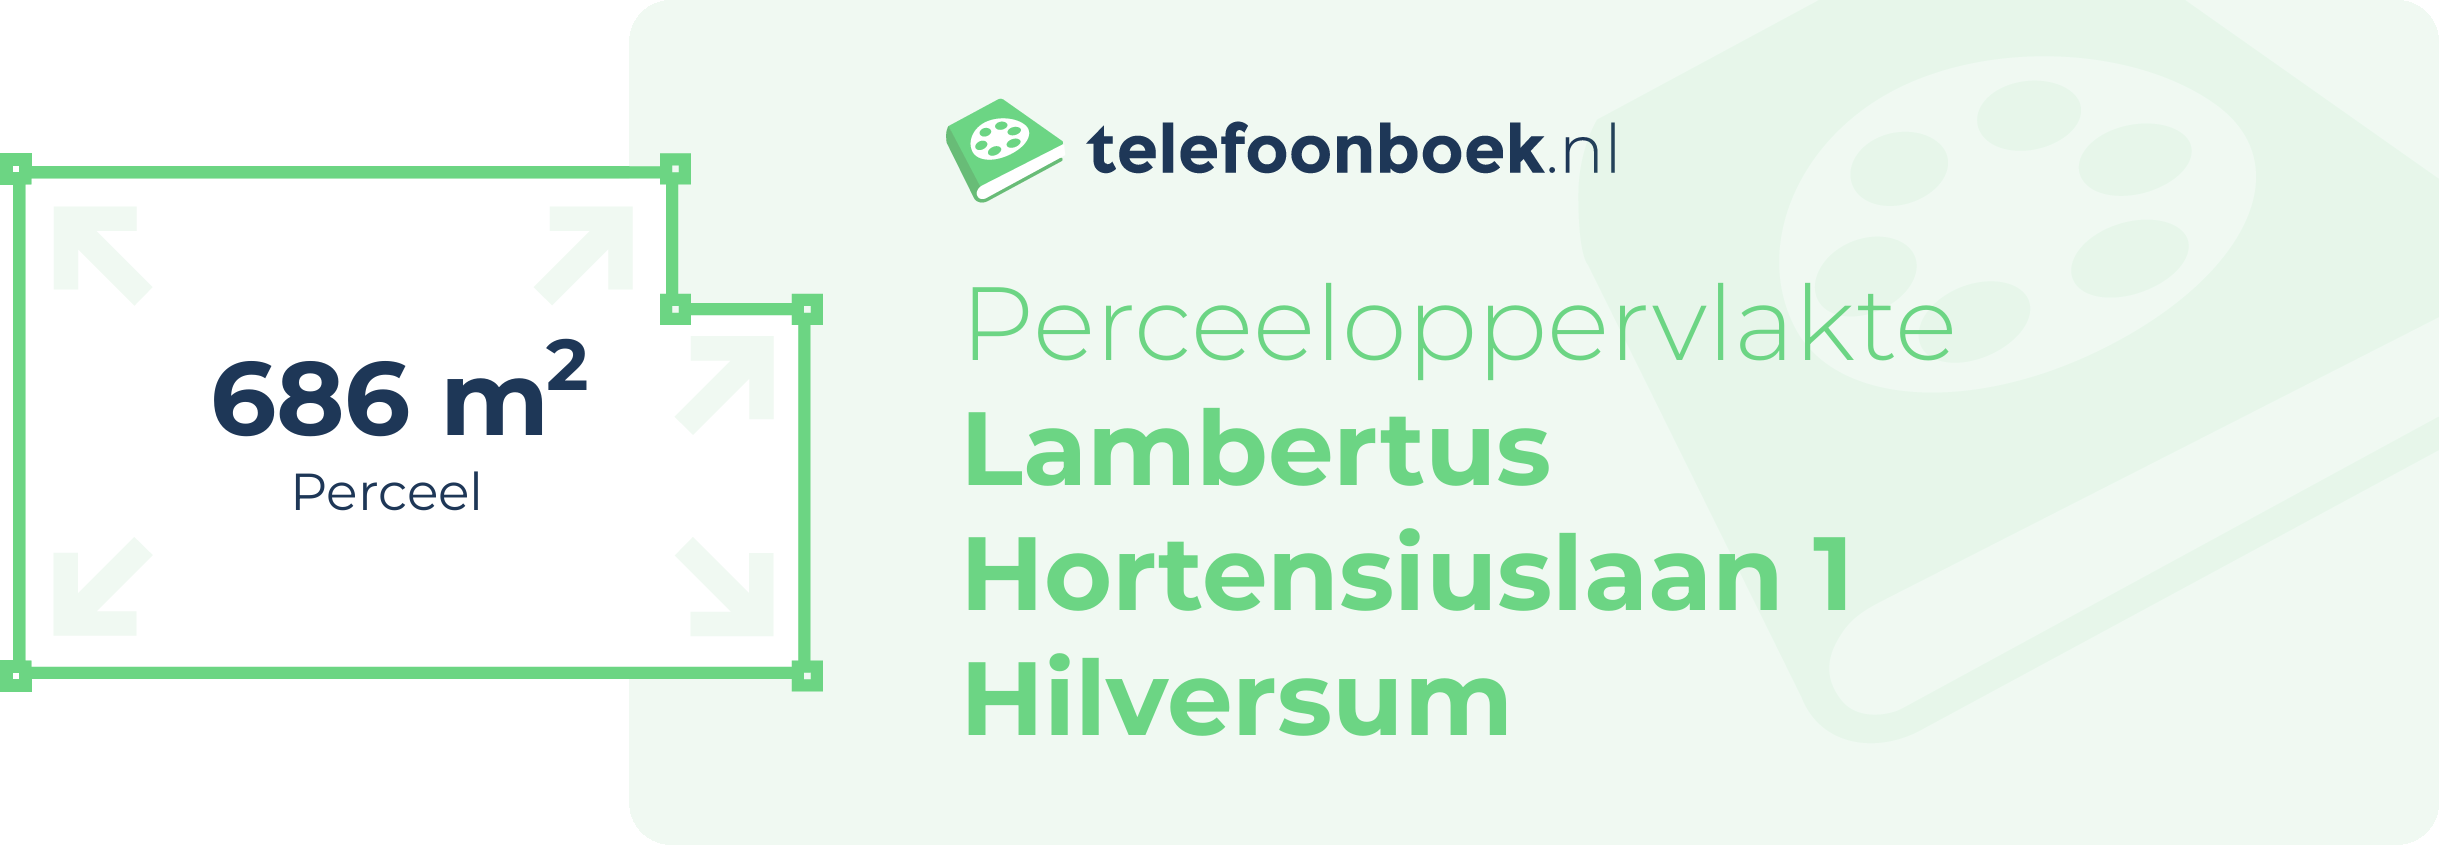 Perceeloppervlakte Lambertus Hortensiuslaan 1 Hilversum